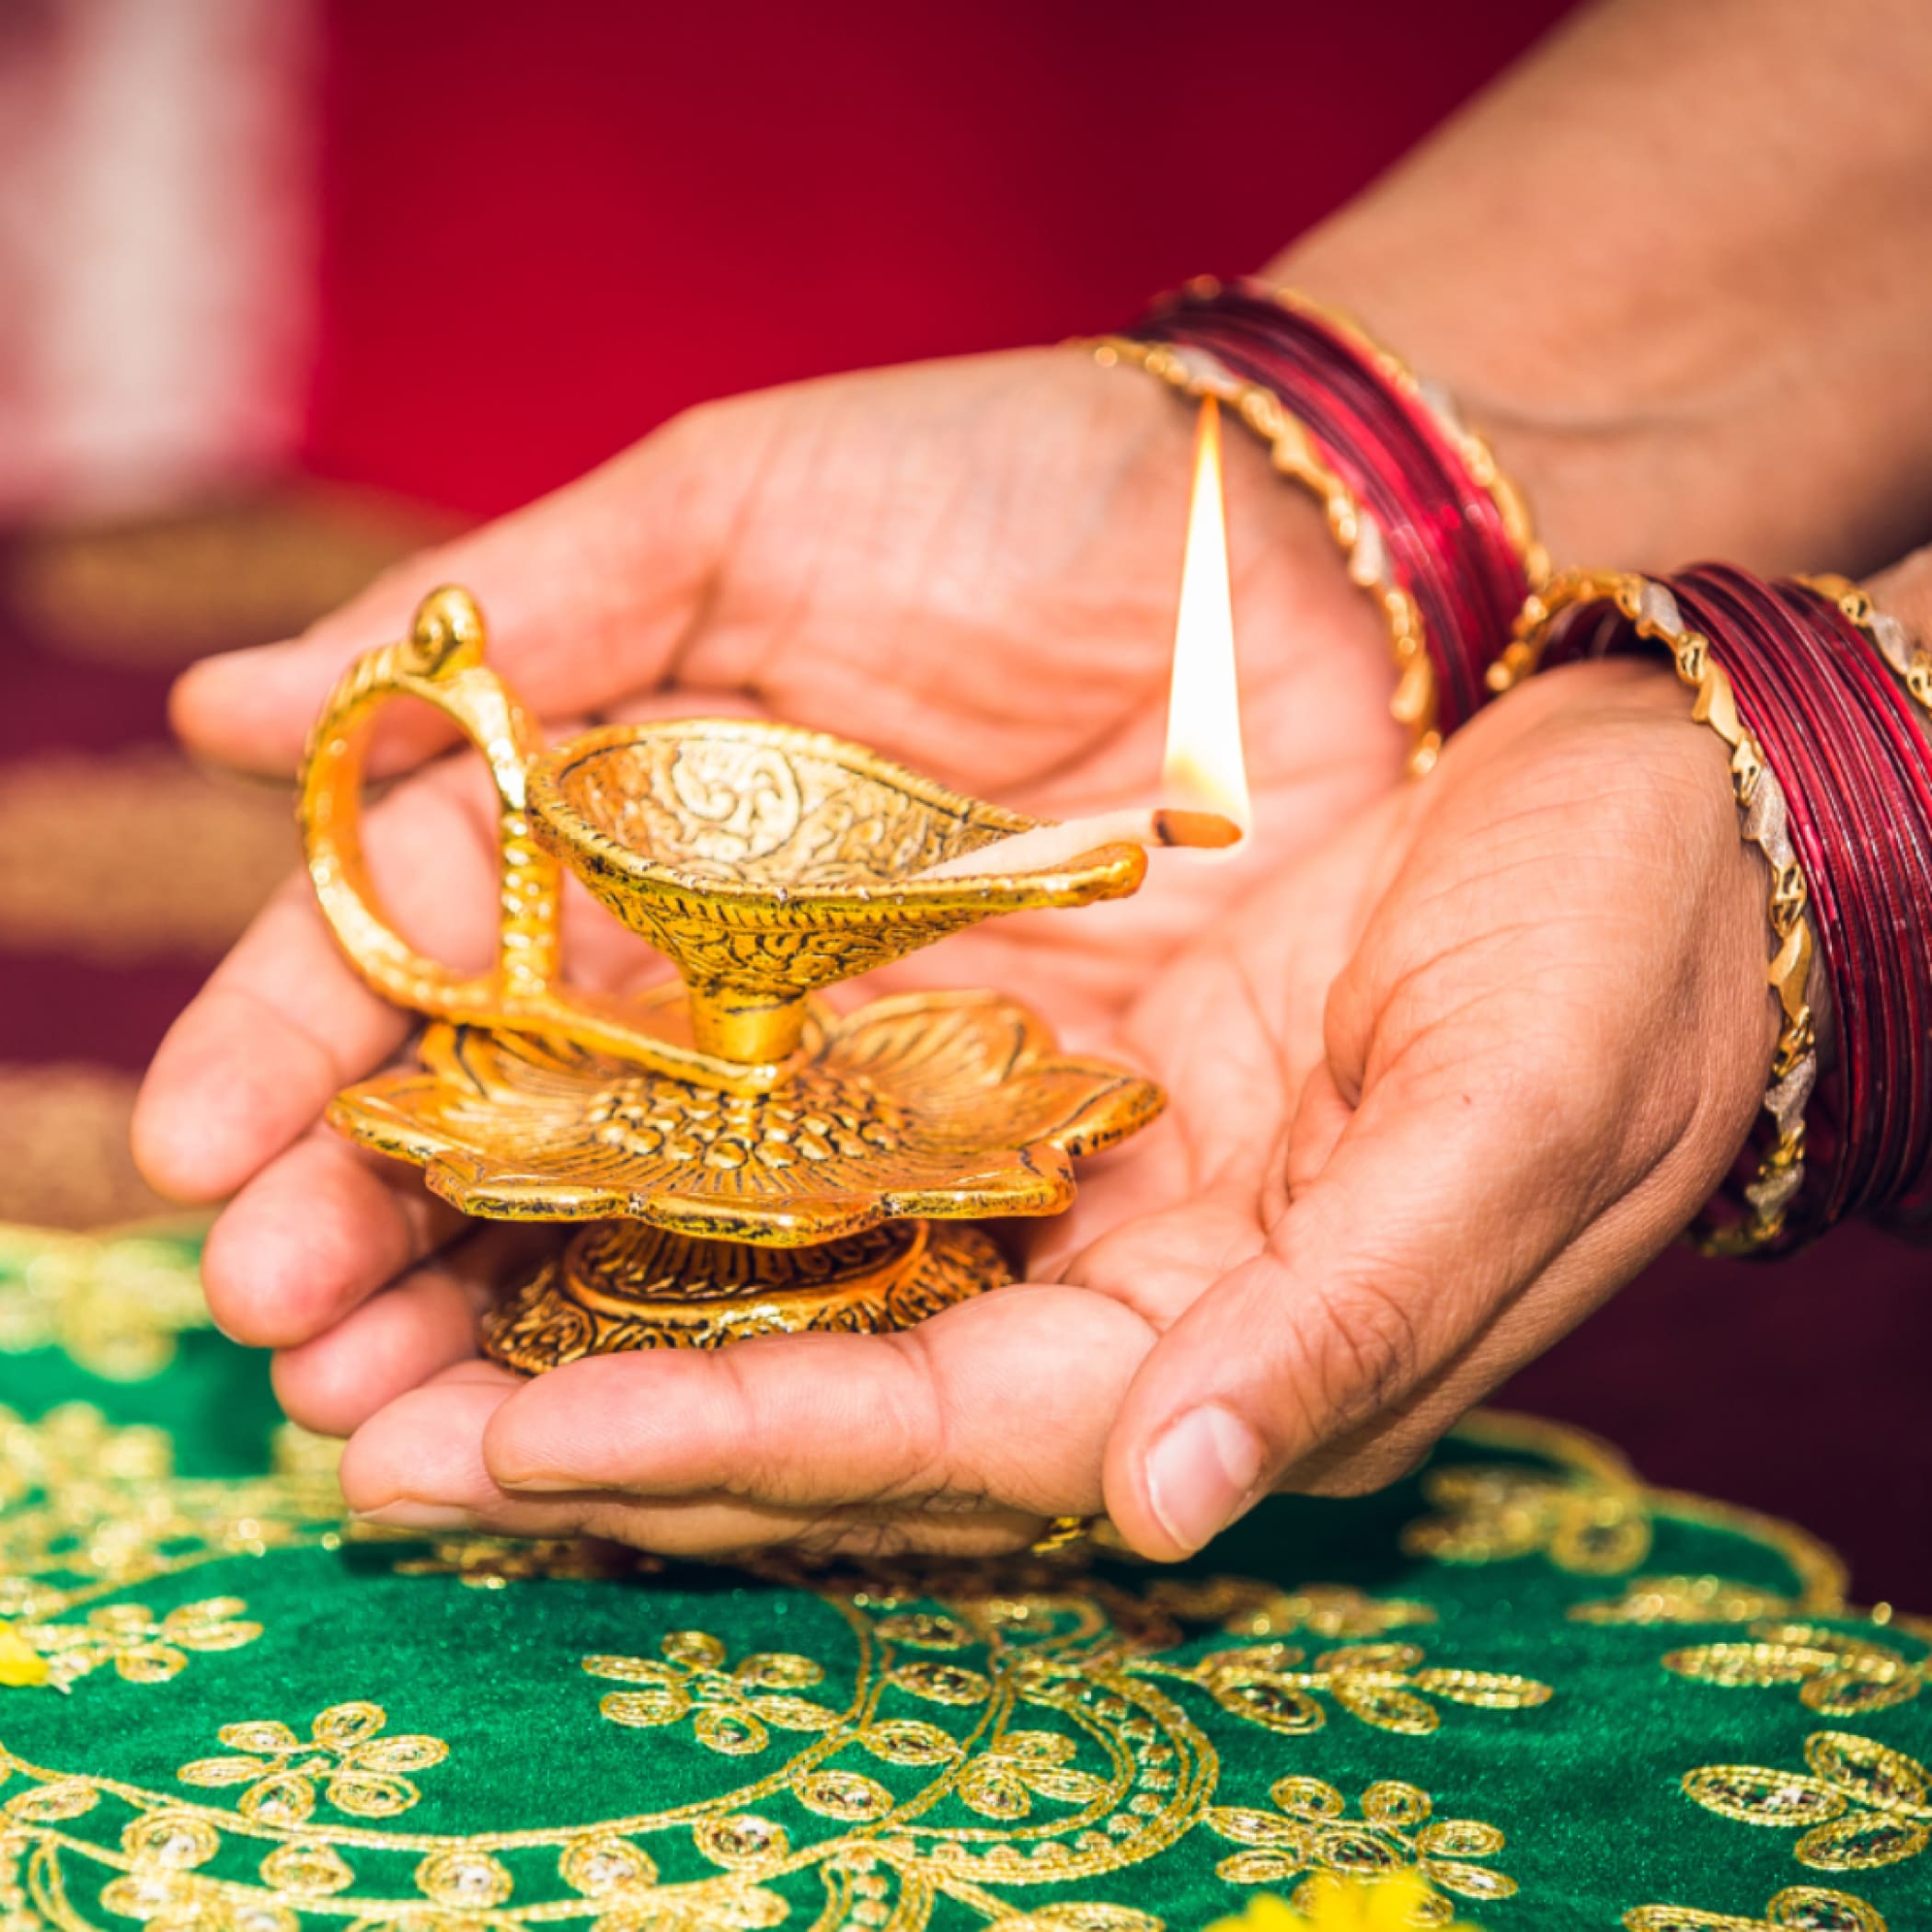 Lotus brass finish diya indian handcrafted diwali gift lamp